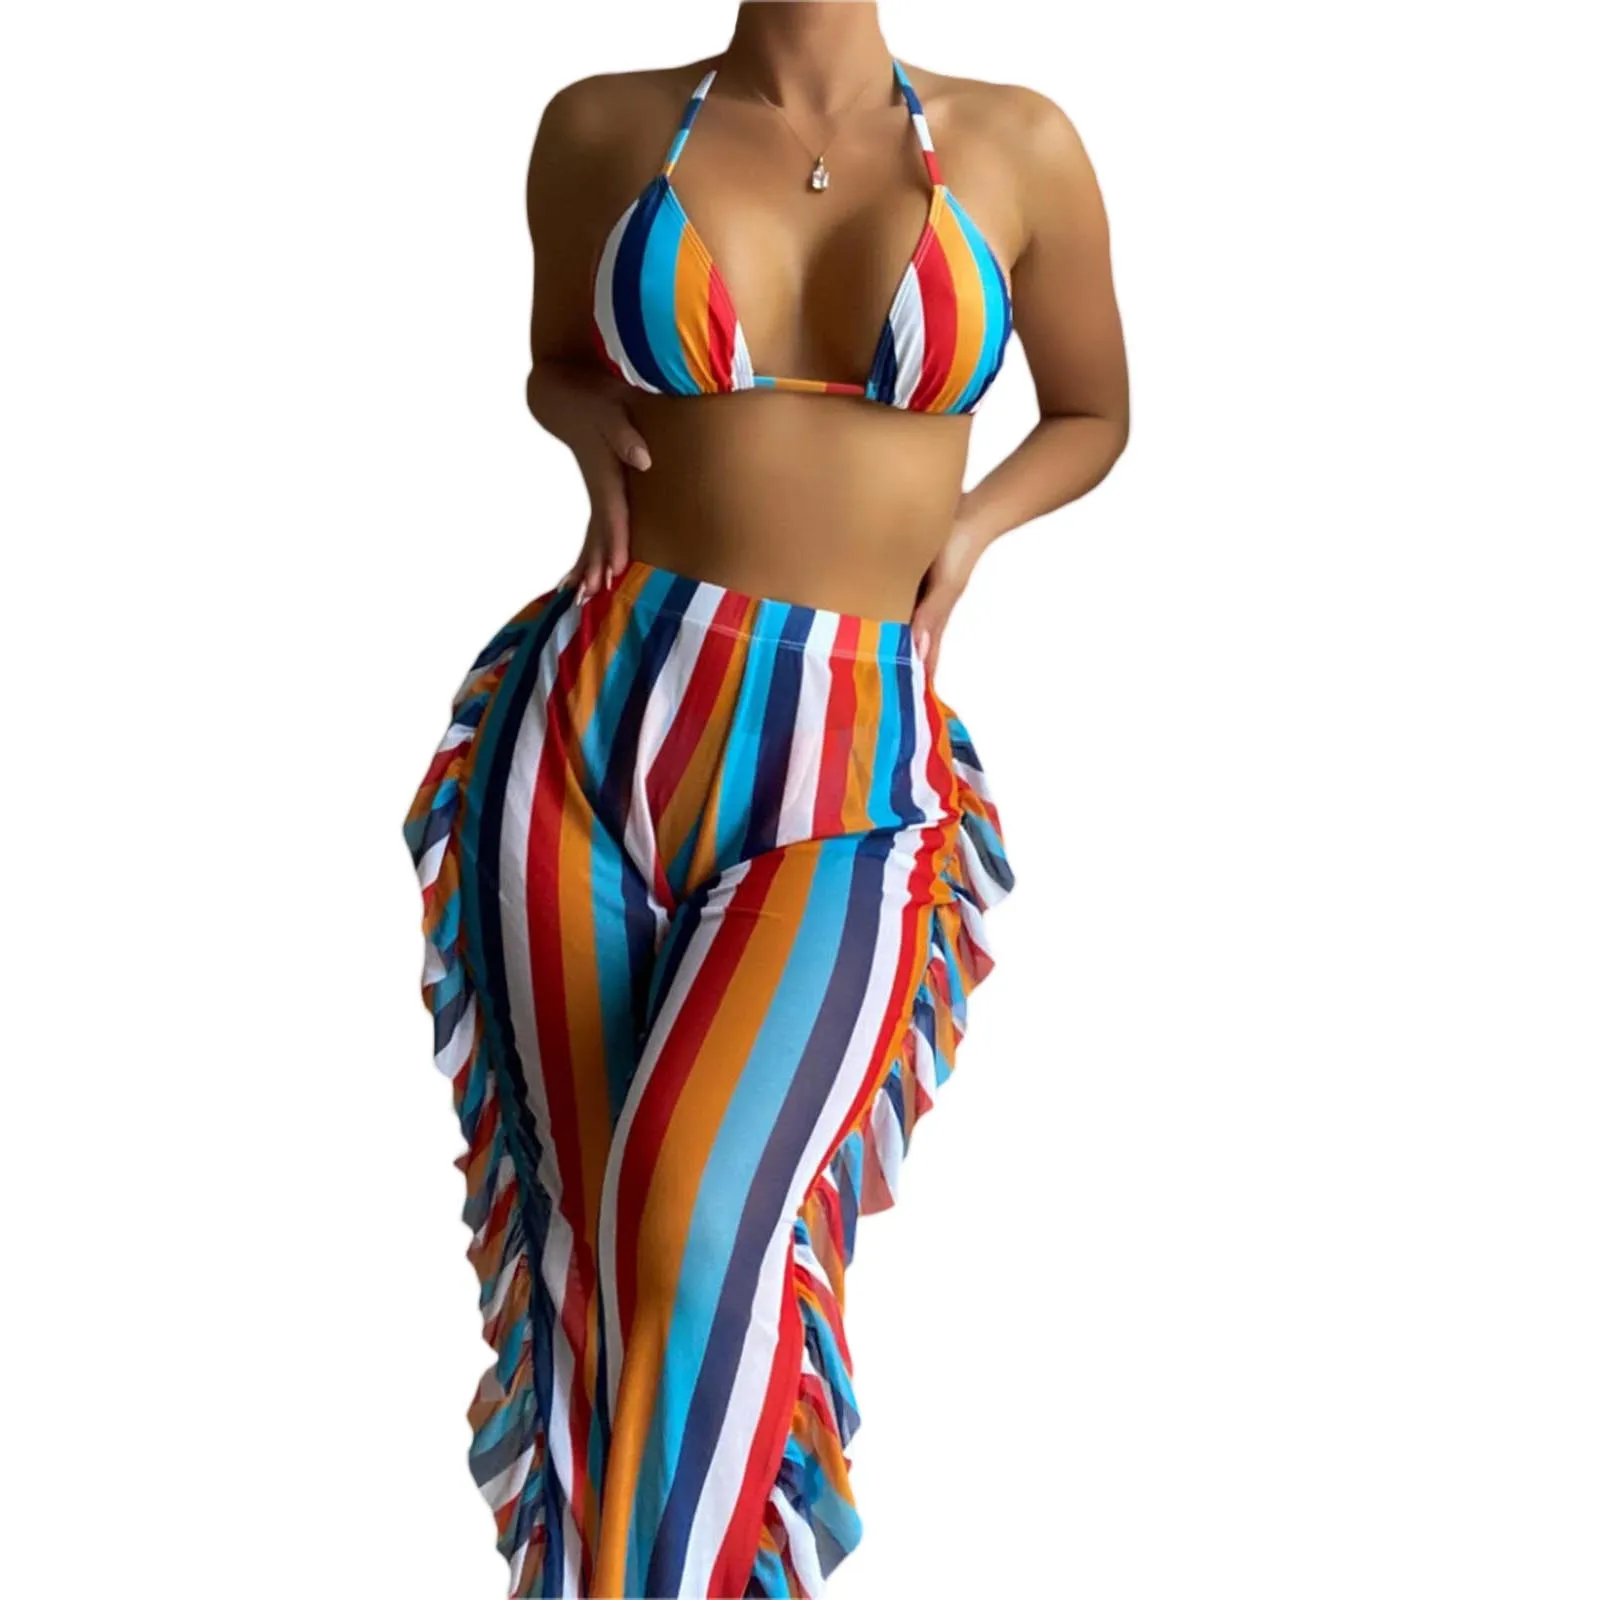 

Women 3 Pieces Bikini Swimsuits Colorful Stripe Halter Neck Padded Bra Bottoms Ruffles Cover-Ups Pants Bathing Suit Set